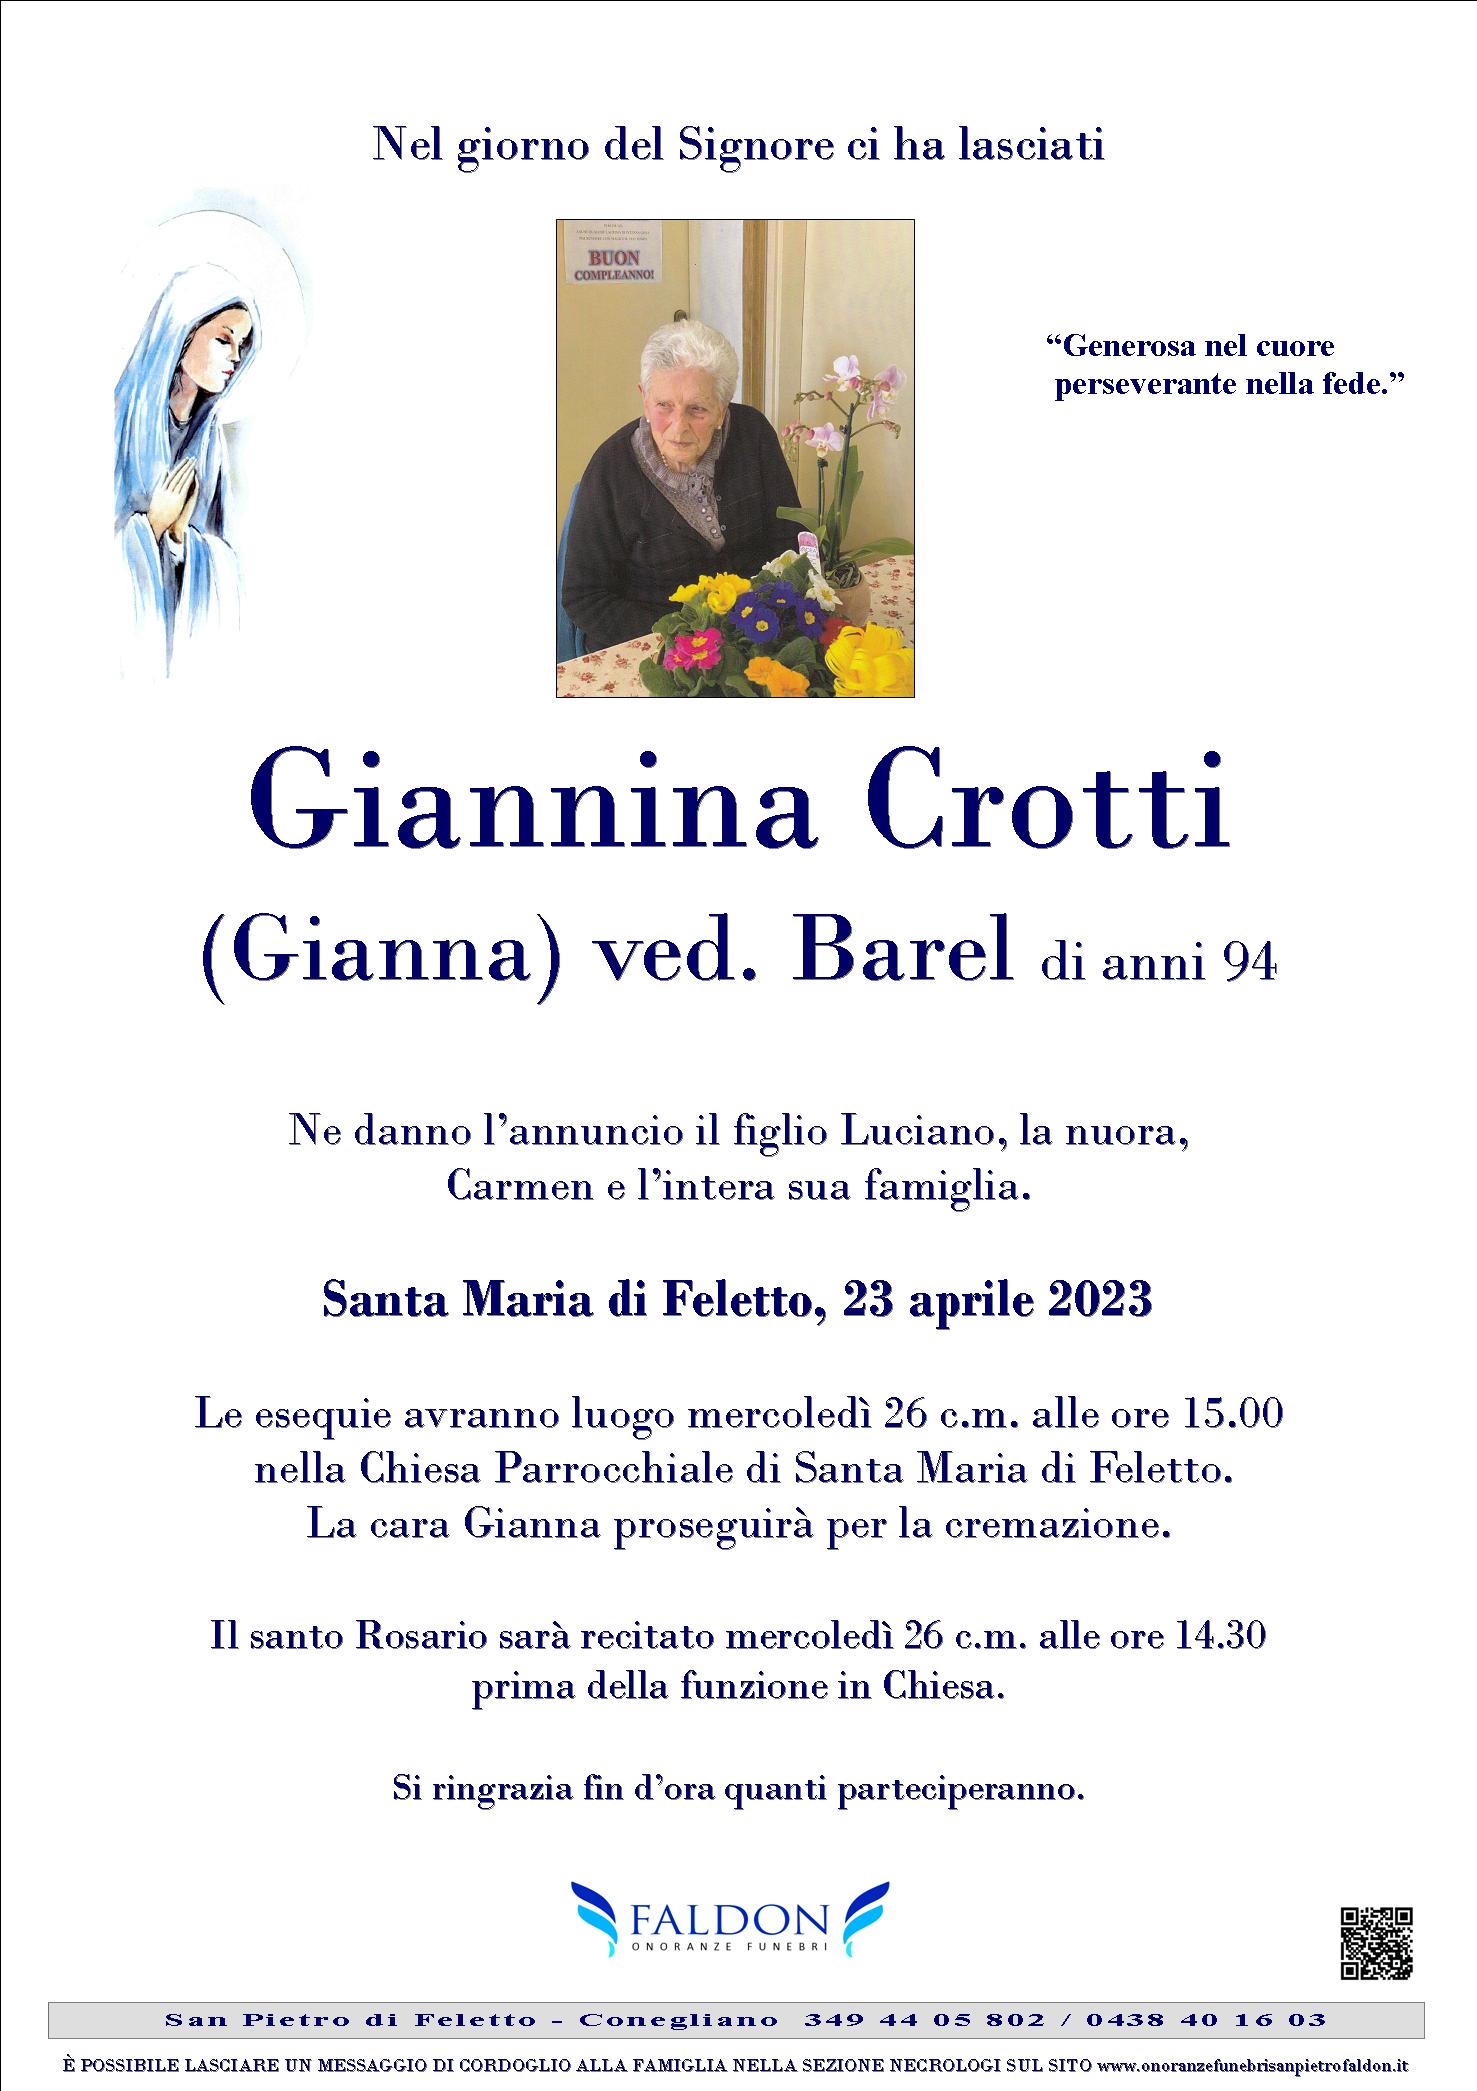 Giannina Crotti